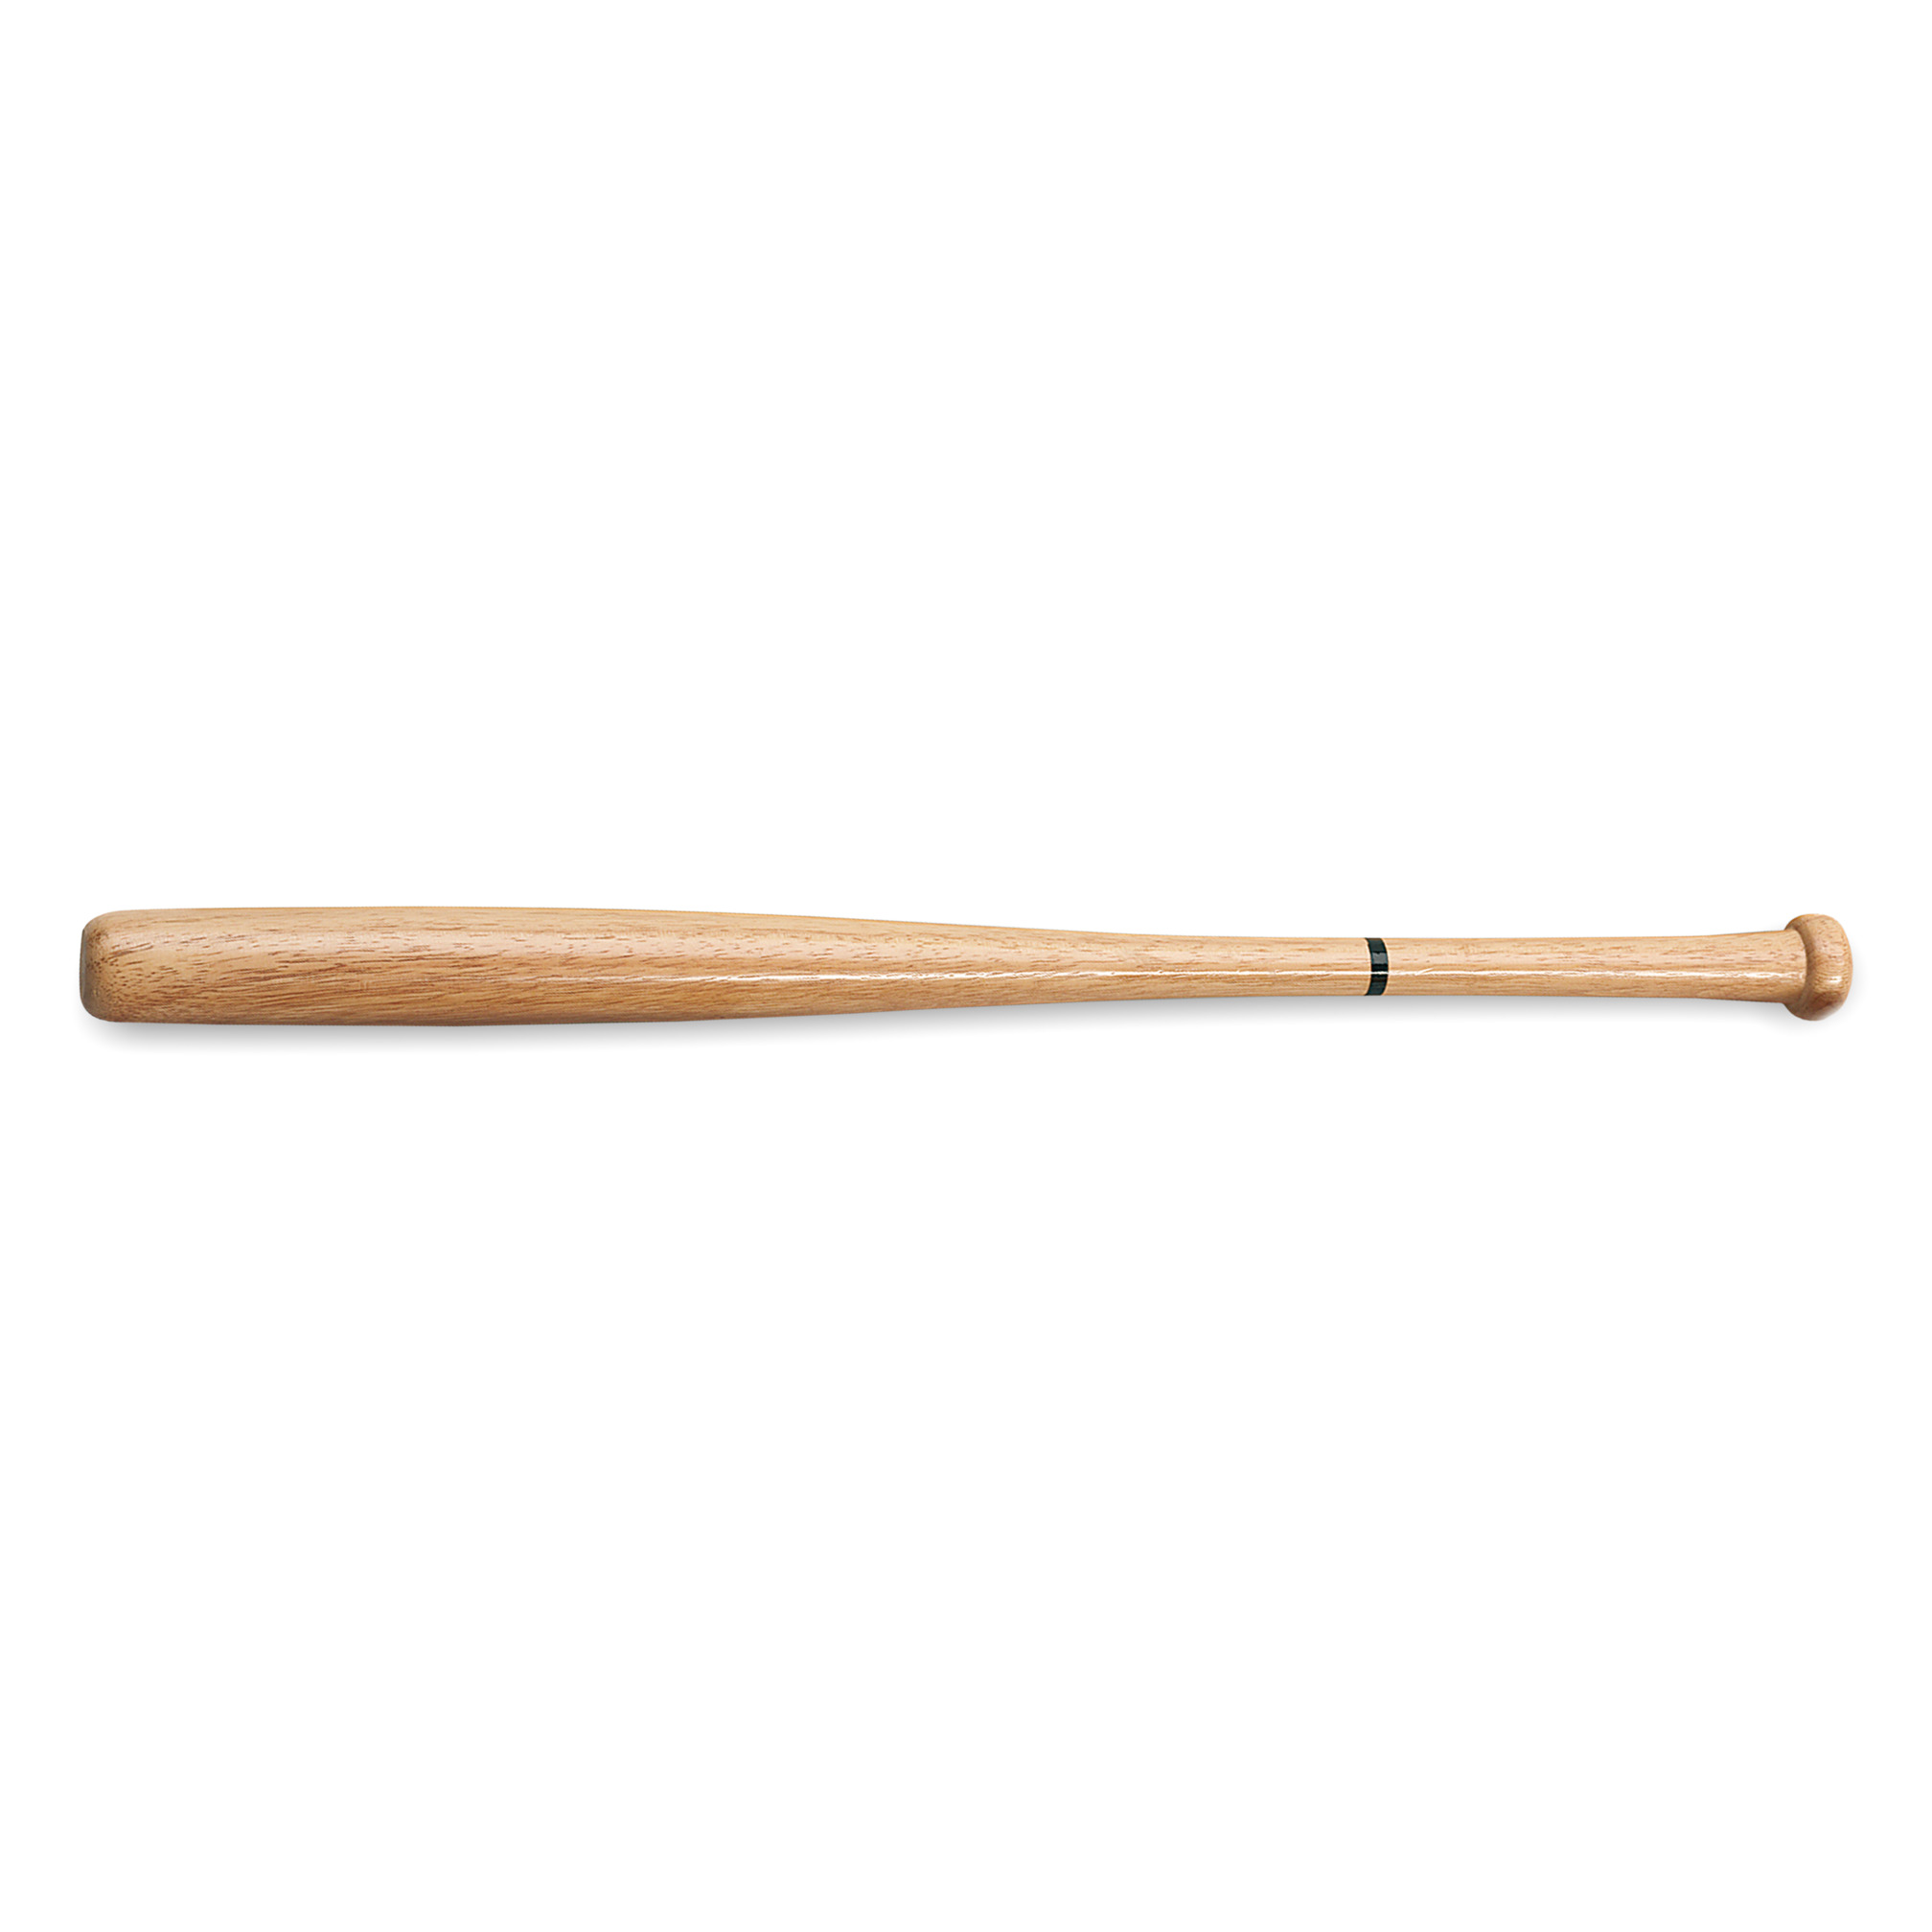 Softbalknuppel hout, 30 inch